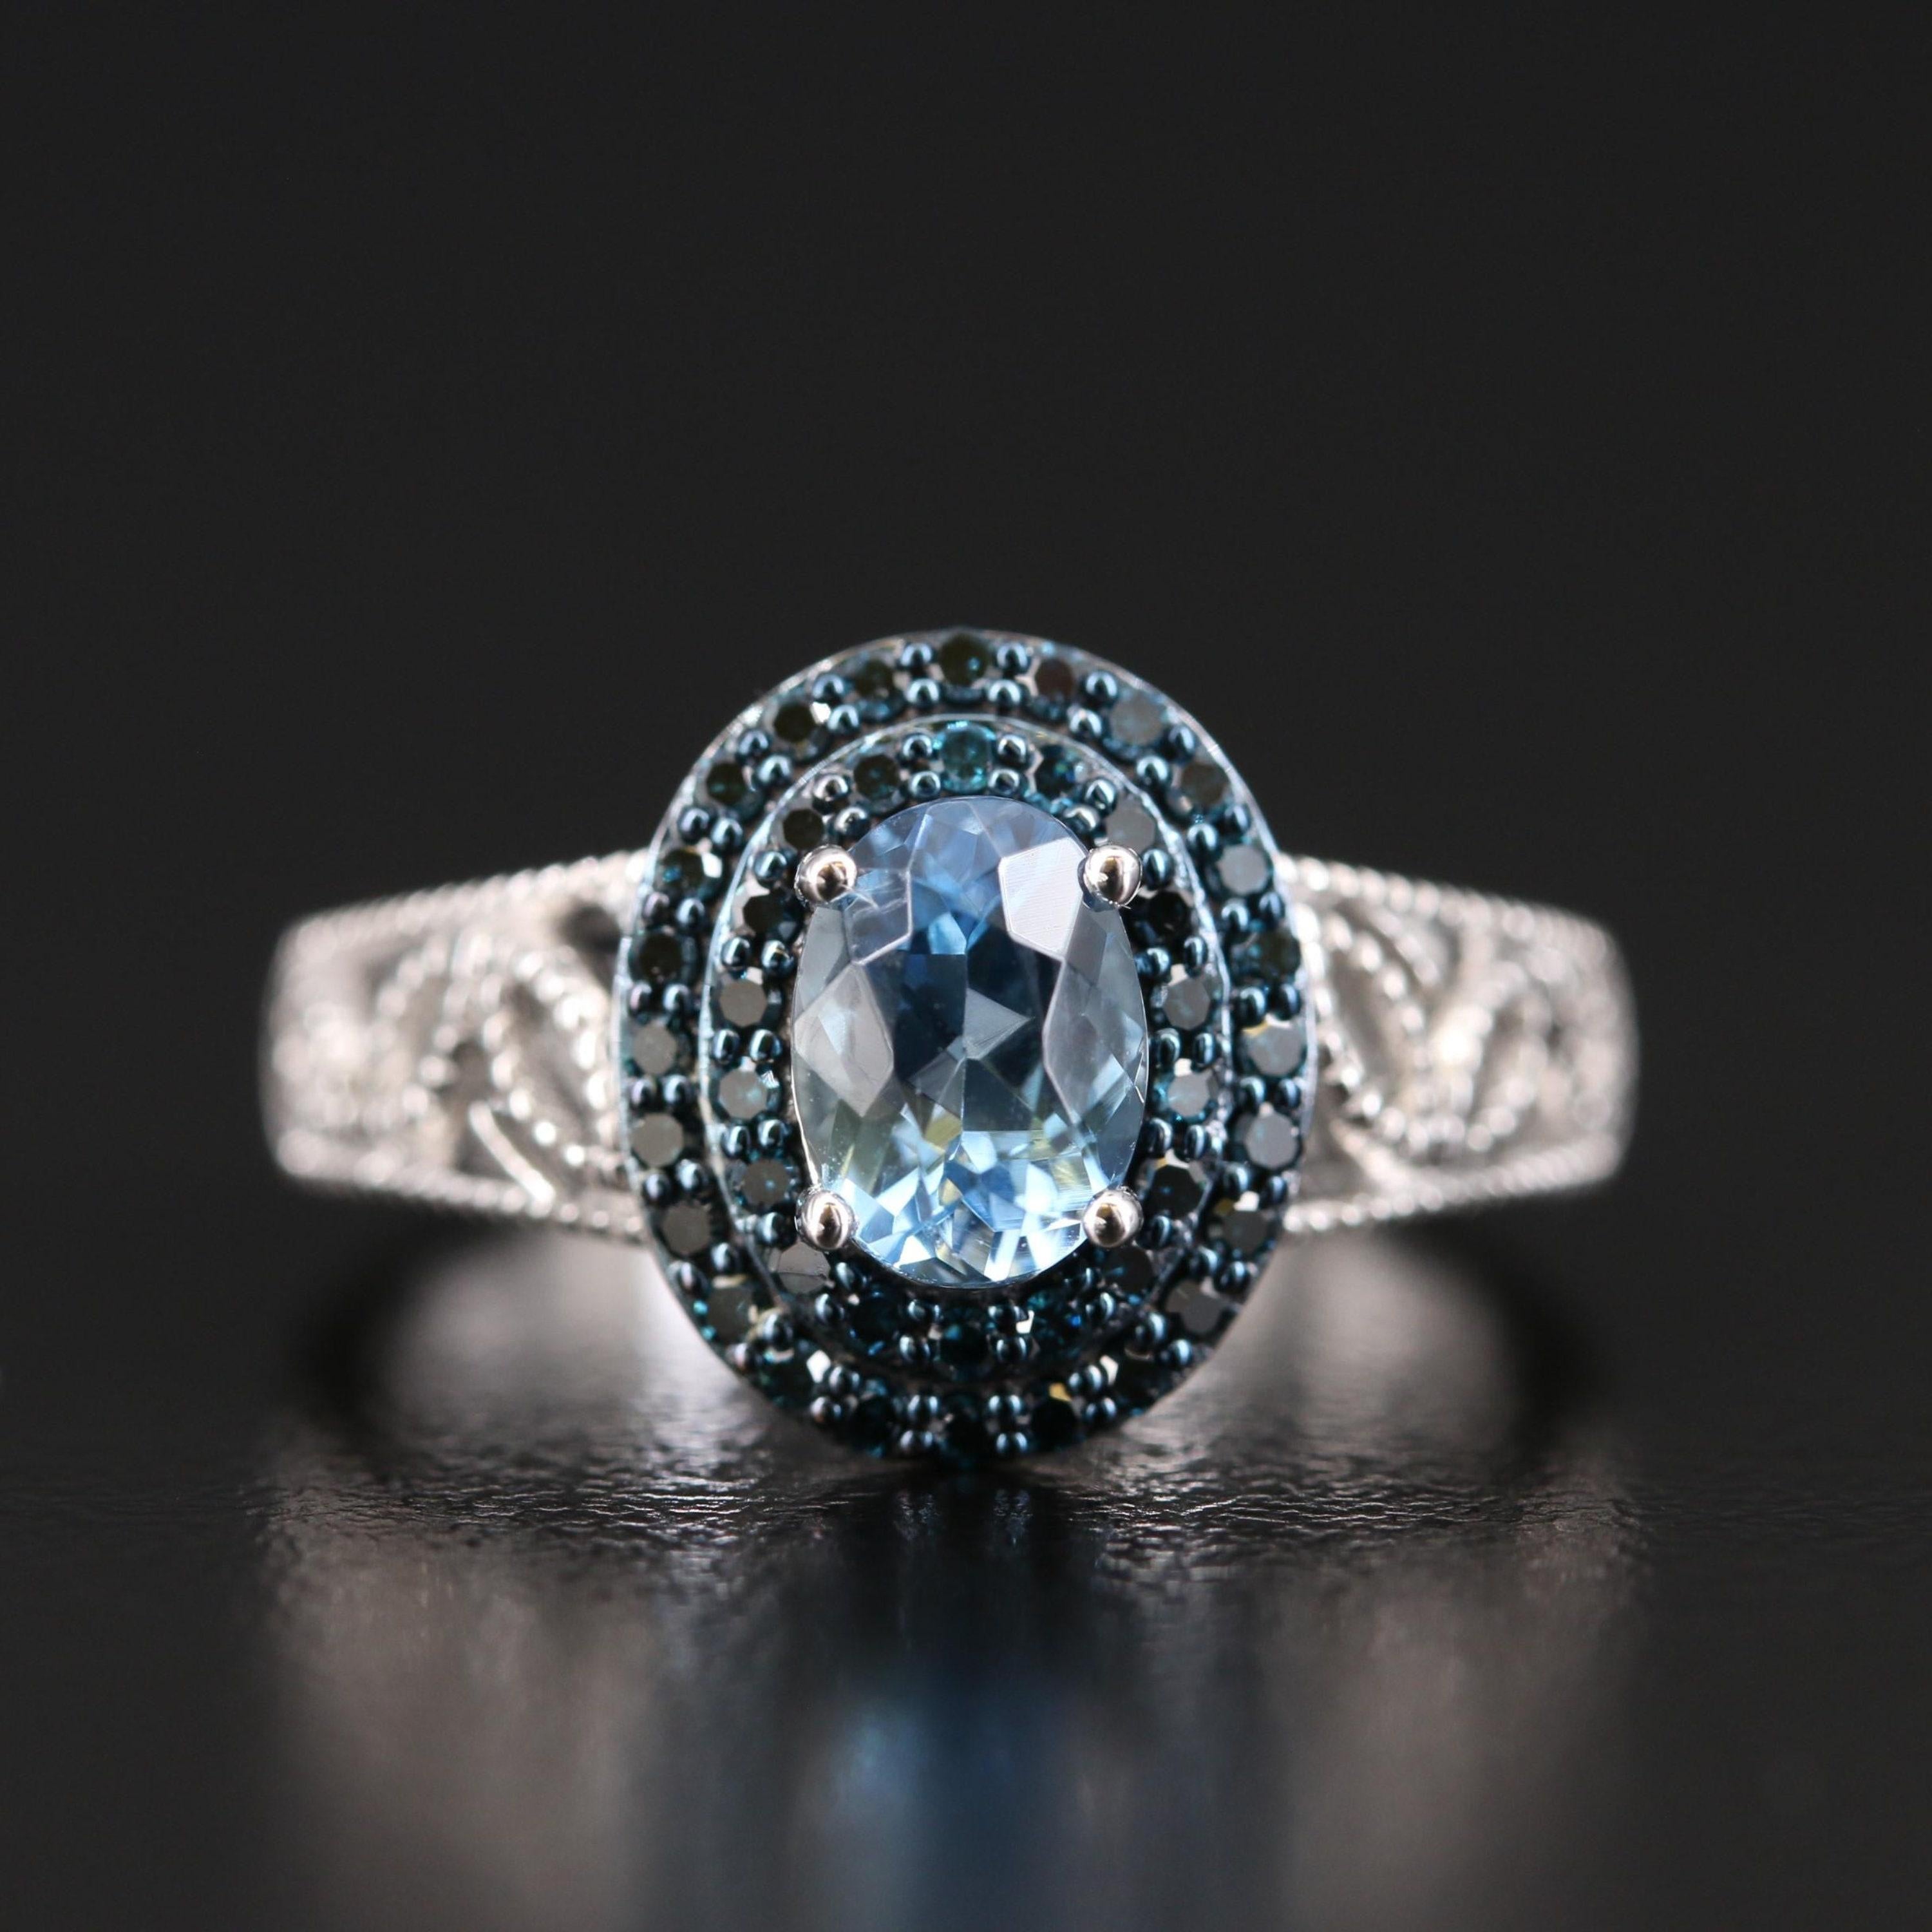 For Sale:  Natural Blue Aquamarine Diamond White Gold Engagement Ring Diamond Cocktail Ring 8